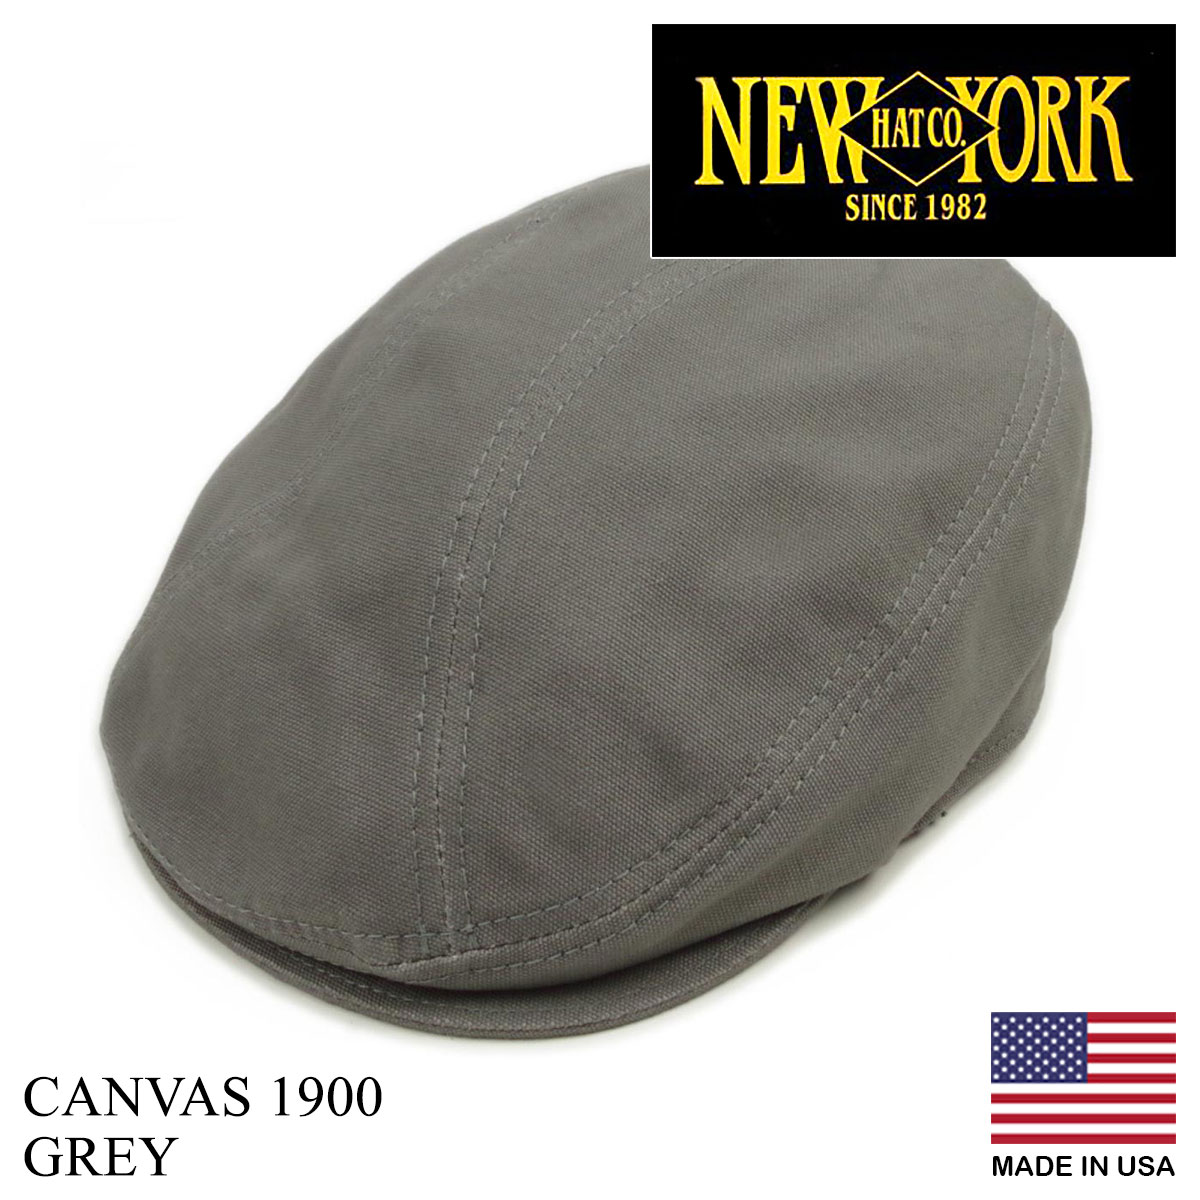 USA製 NEW YORK ハンチング HAT ニューヨークハット 綿100% - 通販